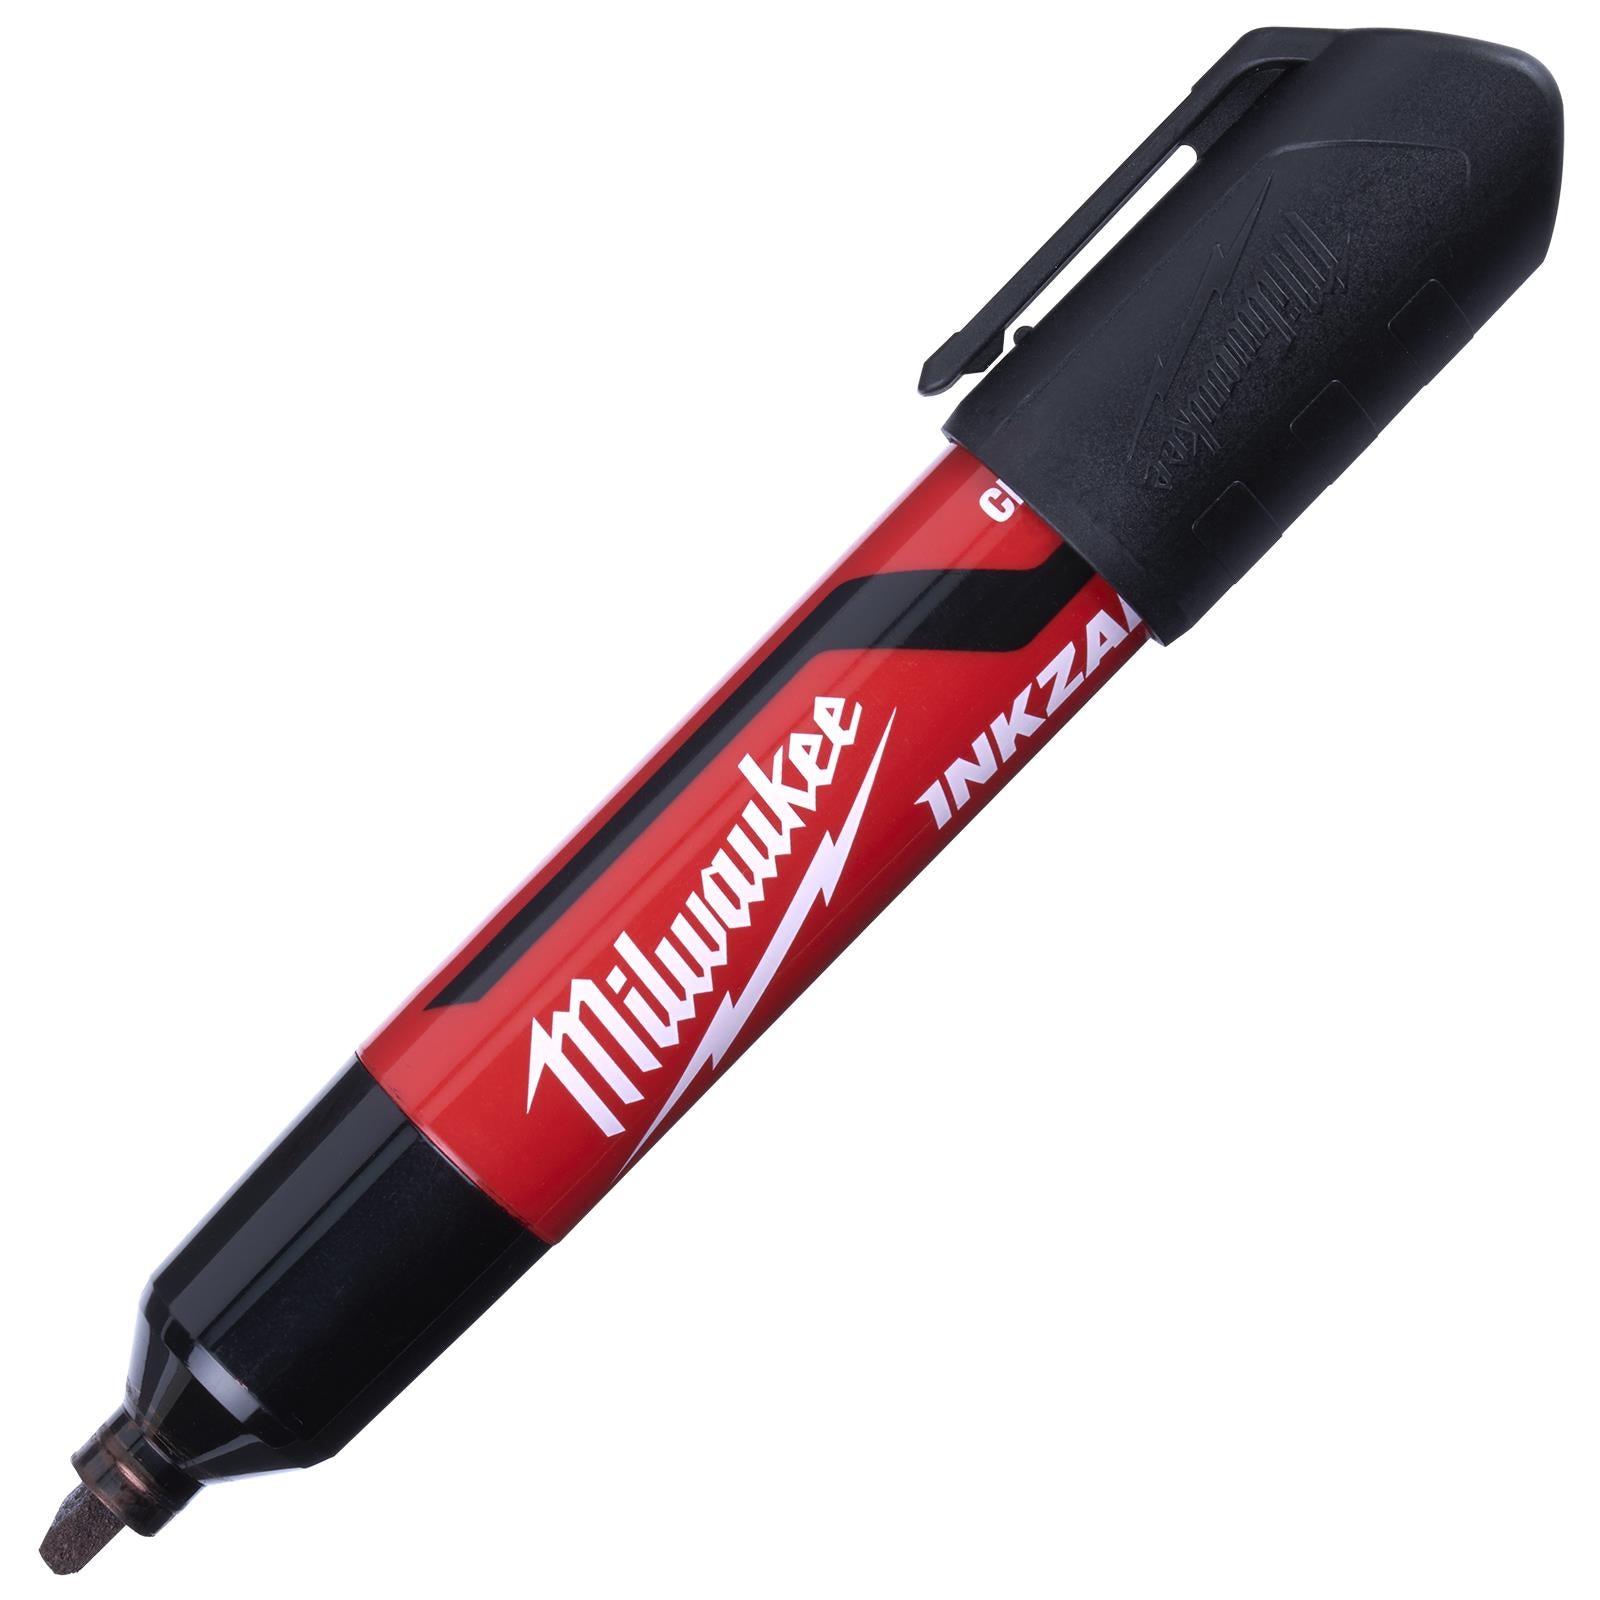 Milwaukee INKZALL Chisel Tip Marker Pen 3 Piece Black